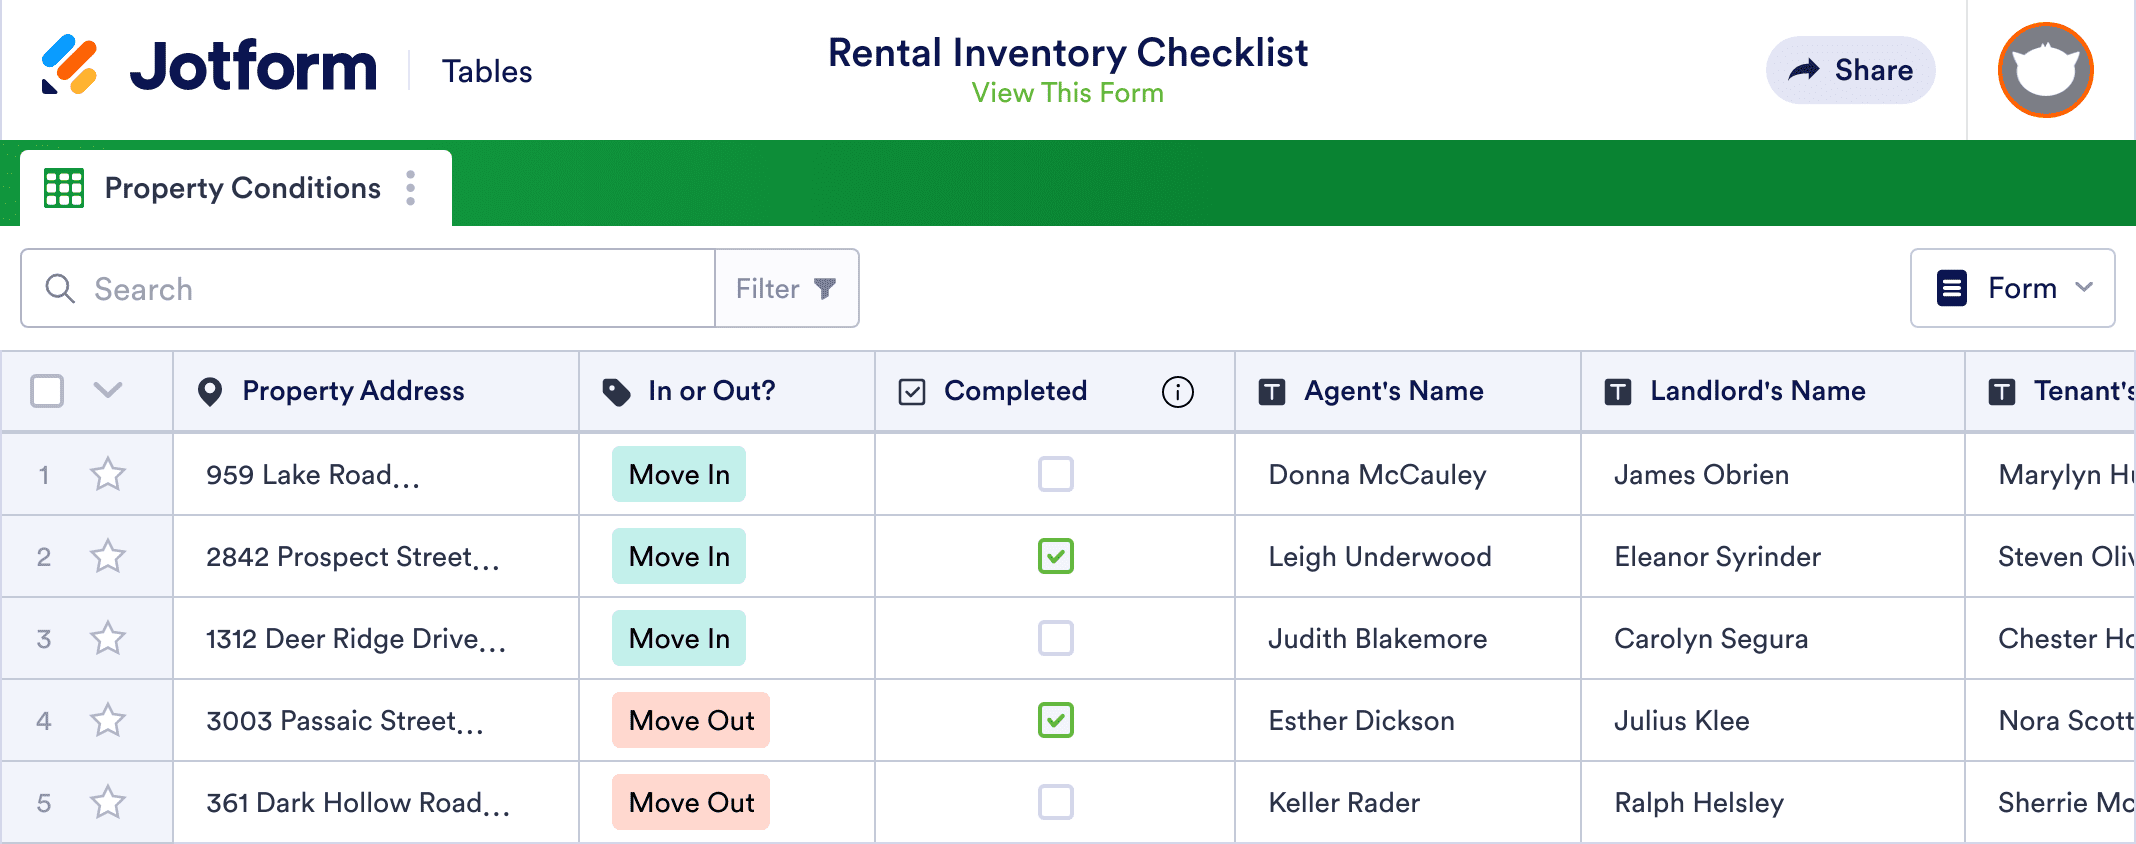 Furnished Rental Inventory Checklist